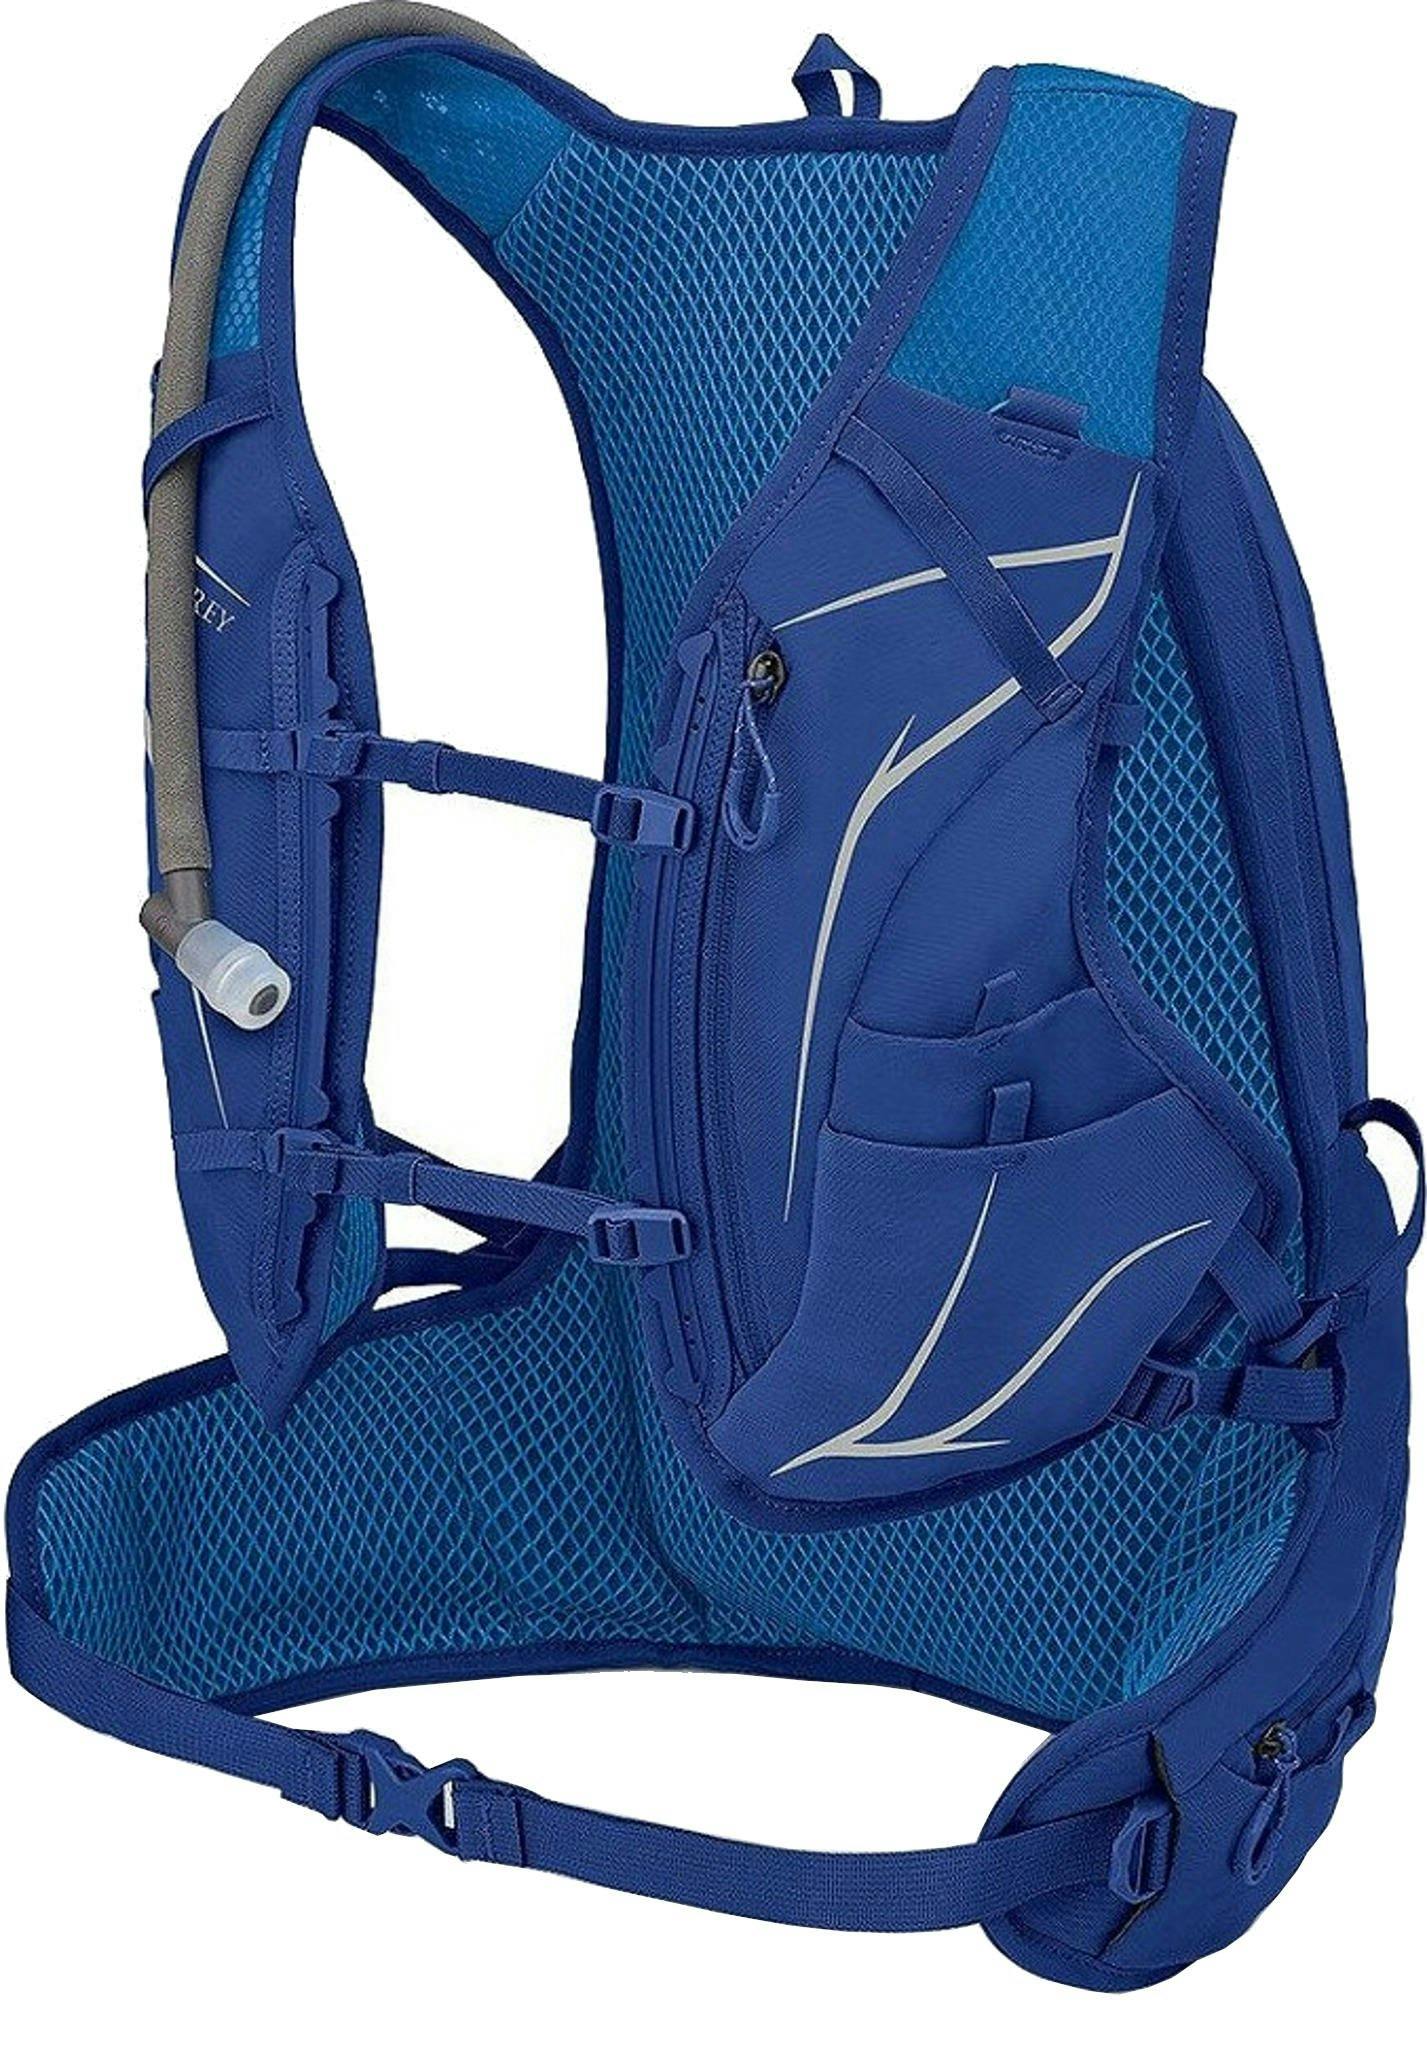 Product image for Duro Hydration Vest 15L - Men's